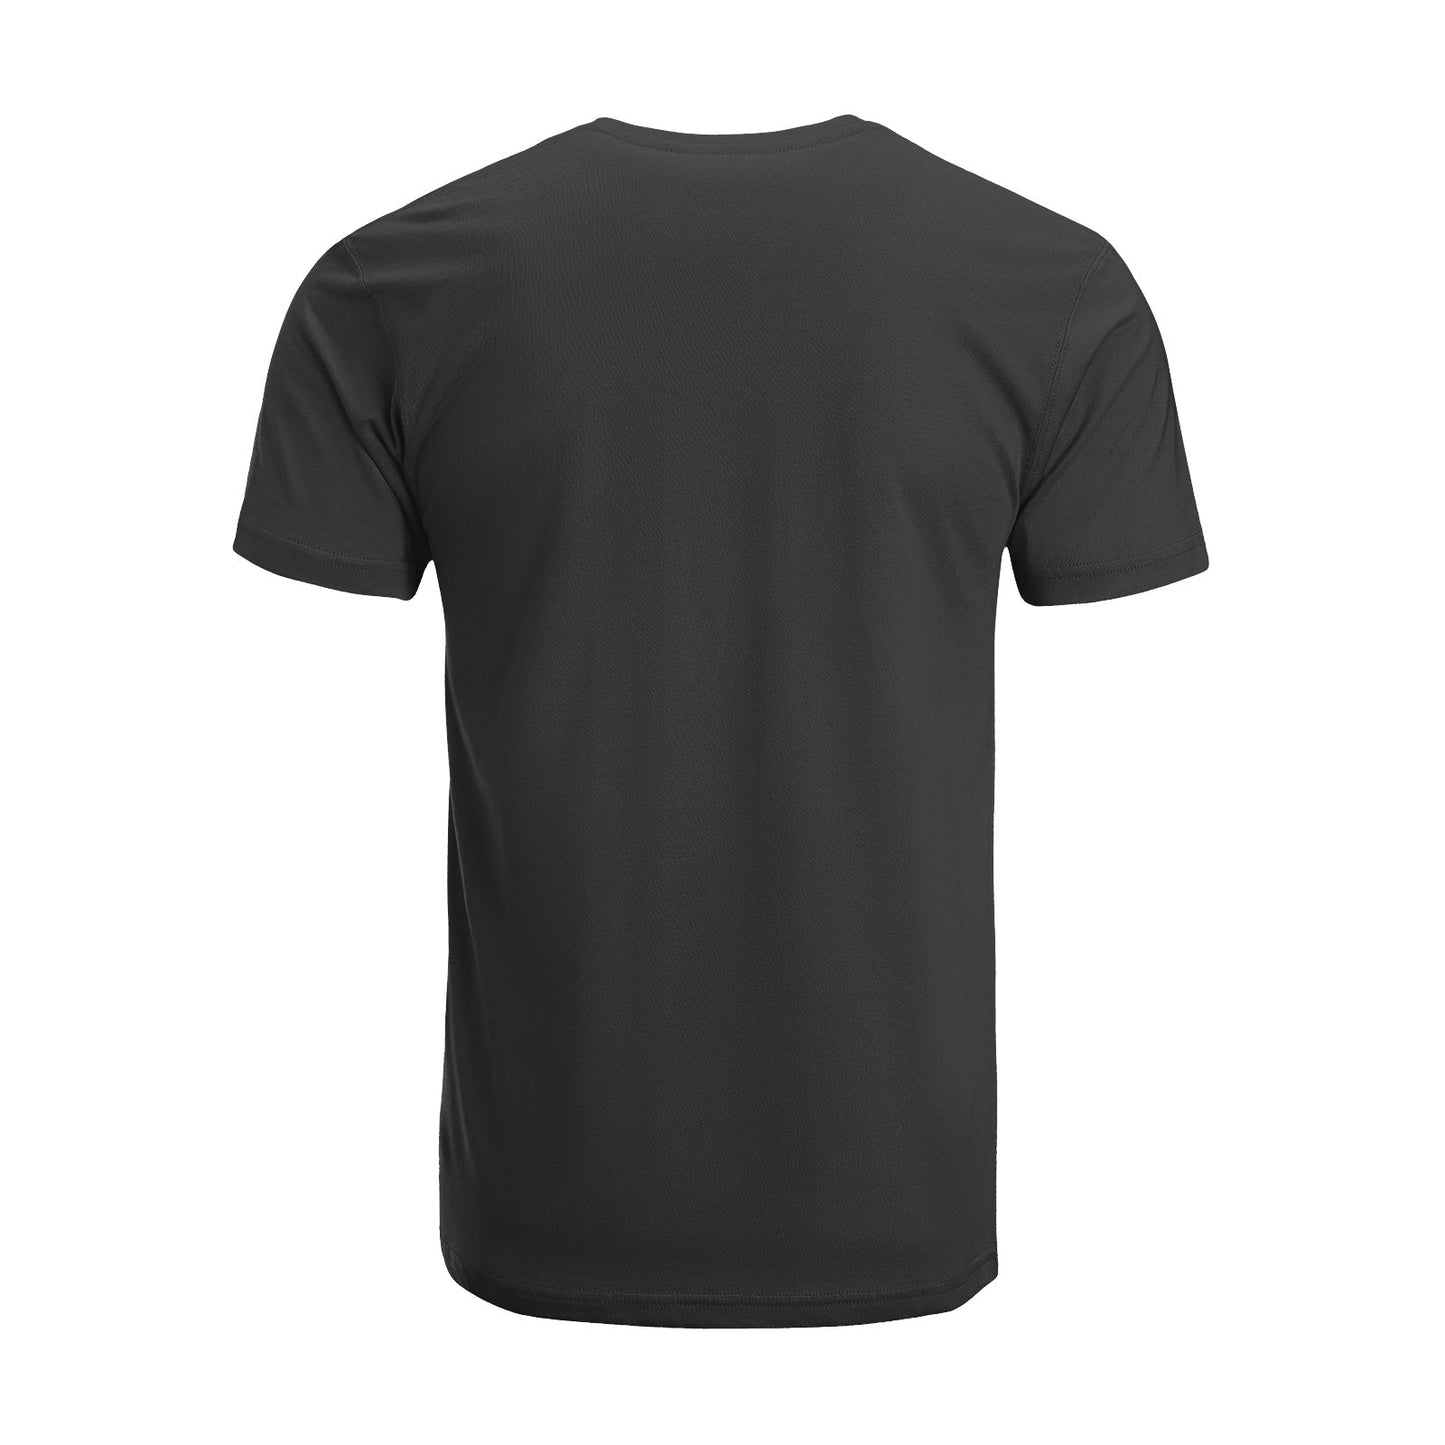 Unisex Short Sleeve Crew Neck Cotton Jersey T-Shirt VEGAN 14